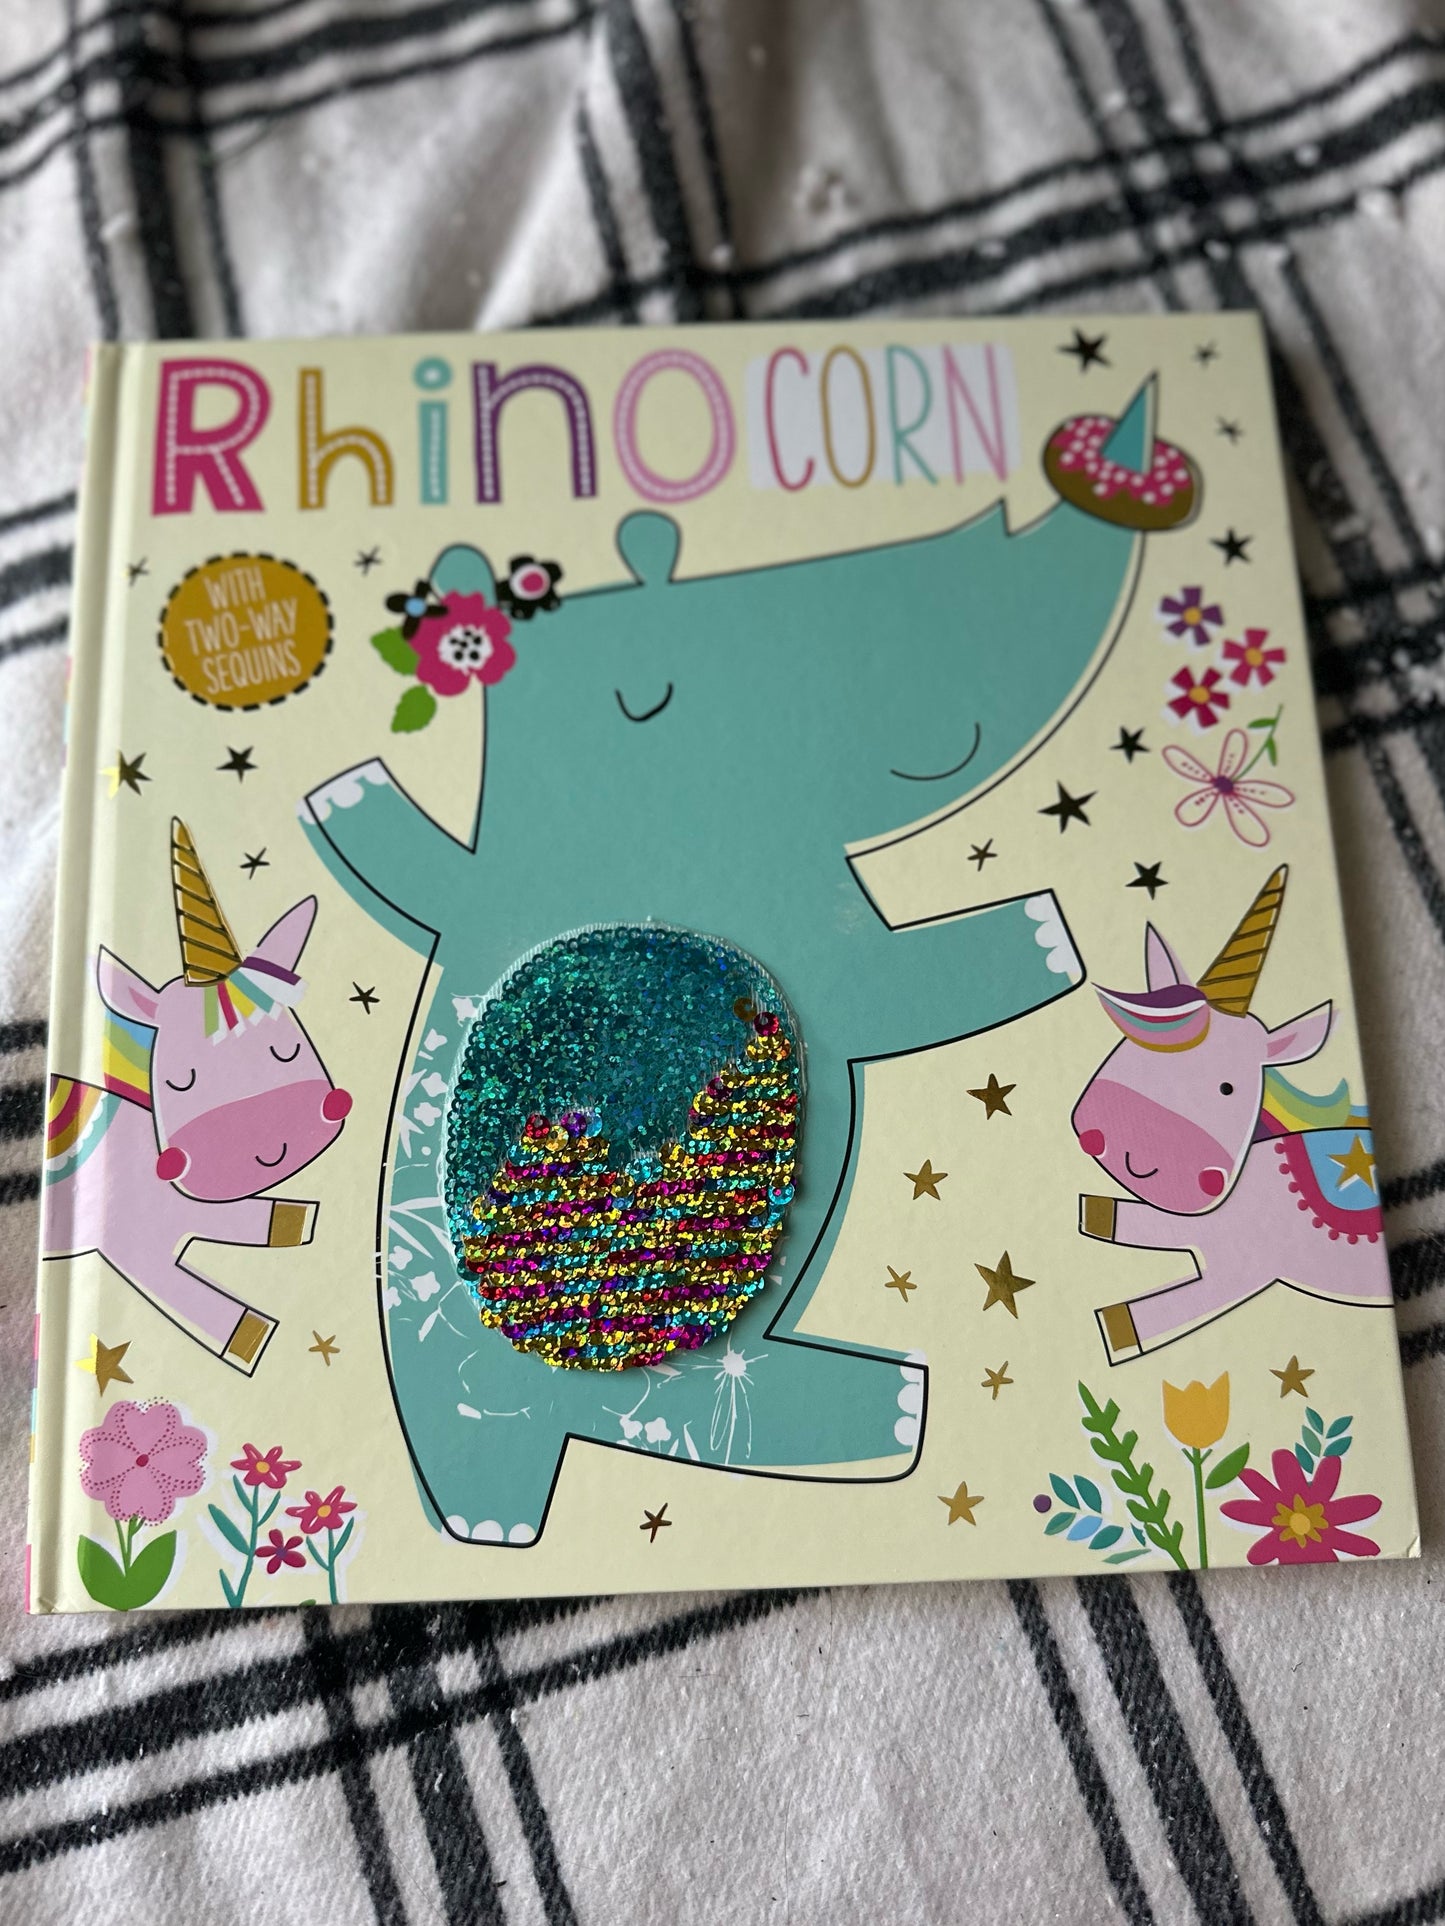 Rhinocorn by Eleanor Best